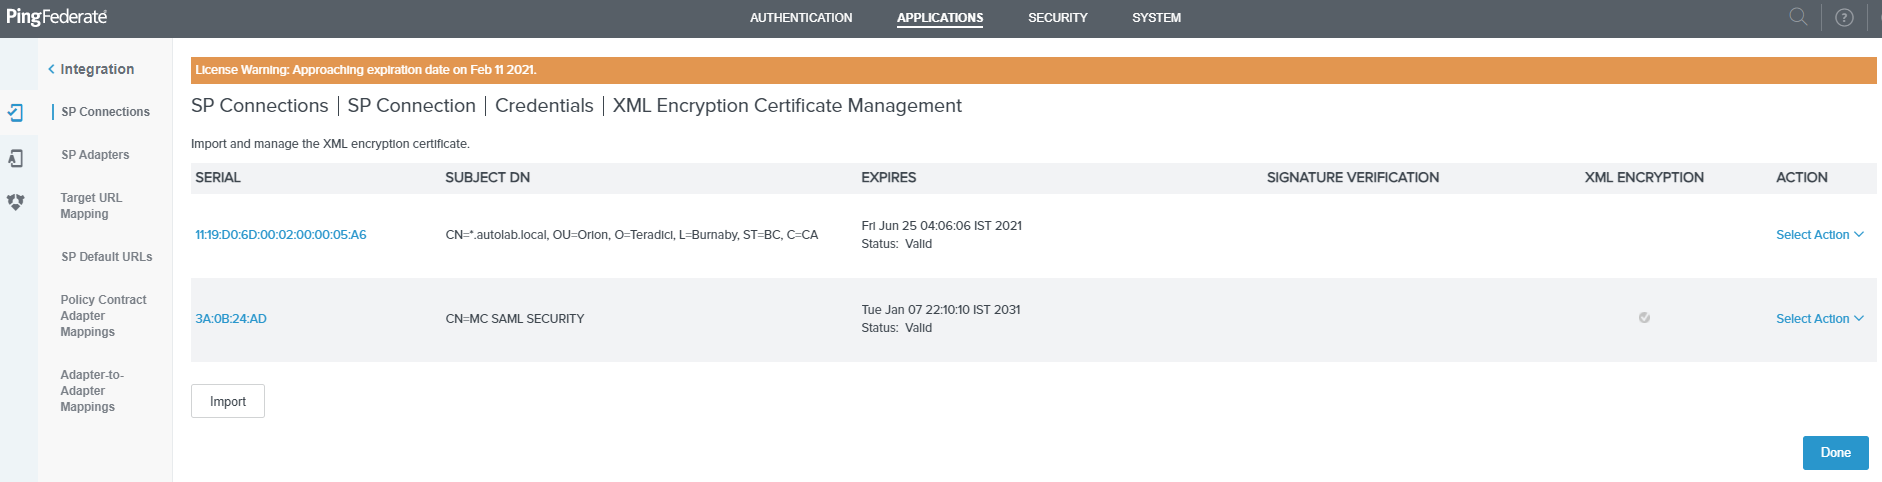 SP Connections Credentials XML Encryption Certificate Management